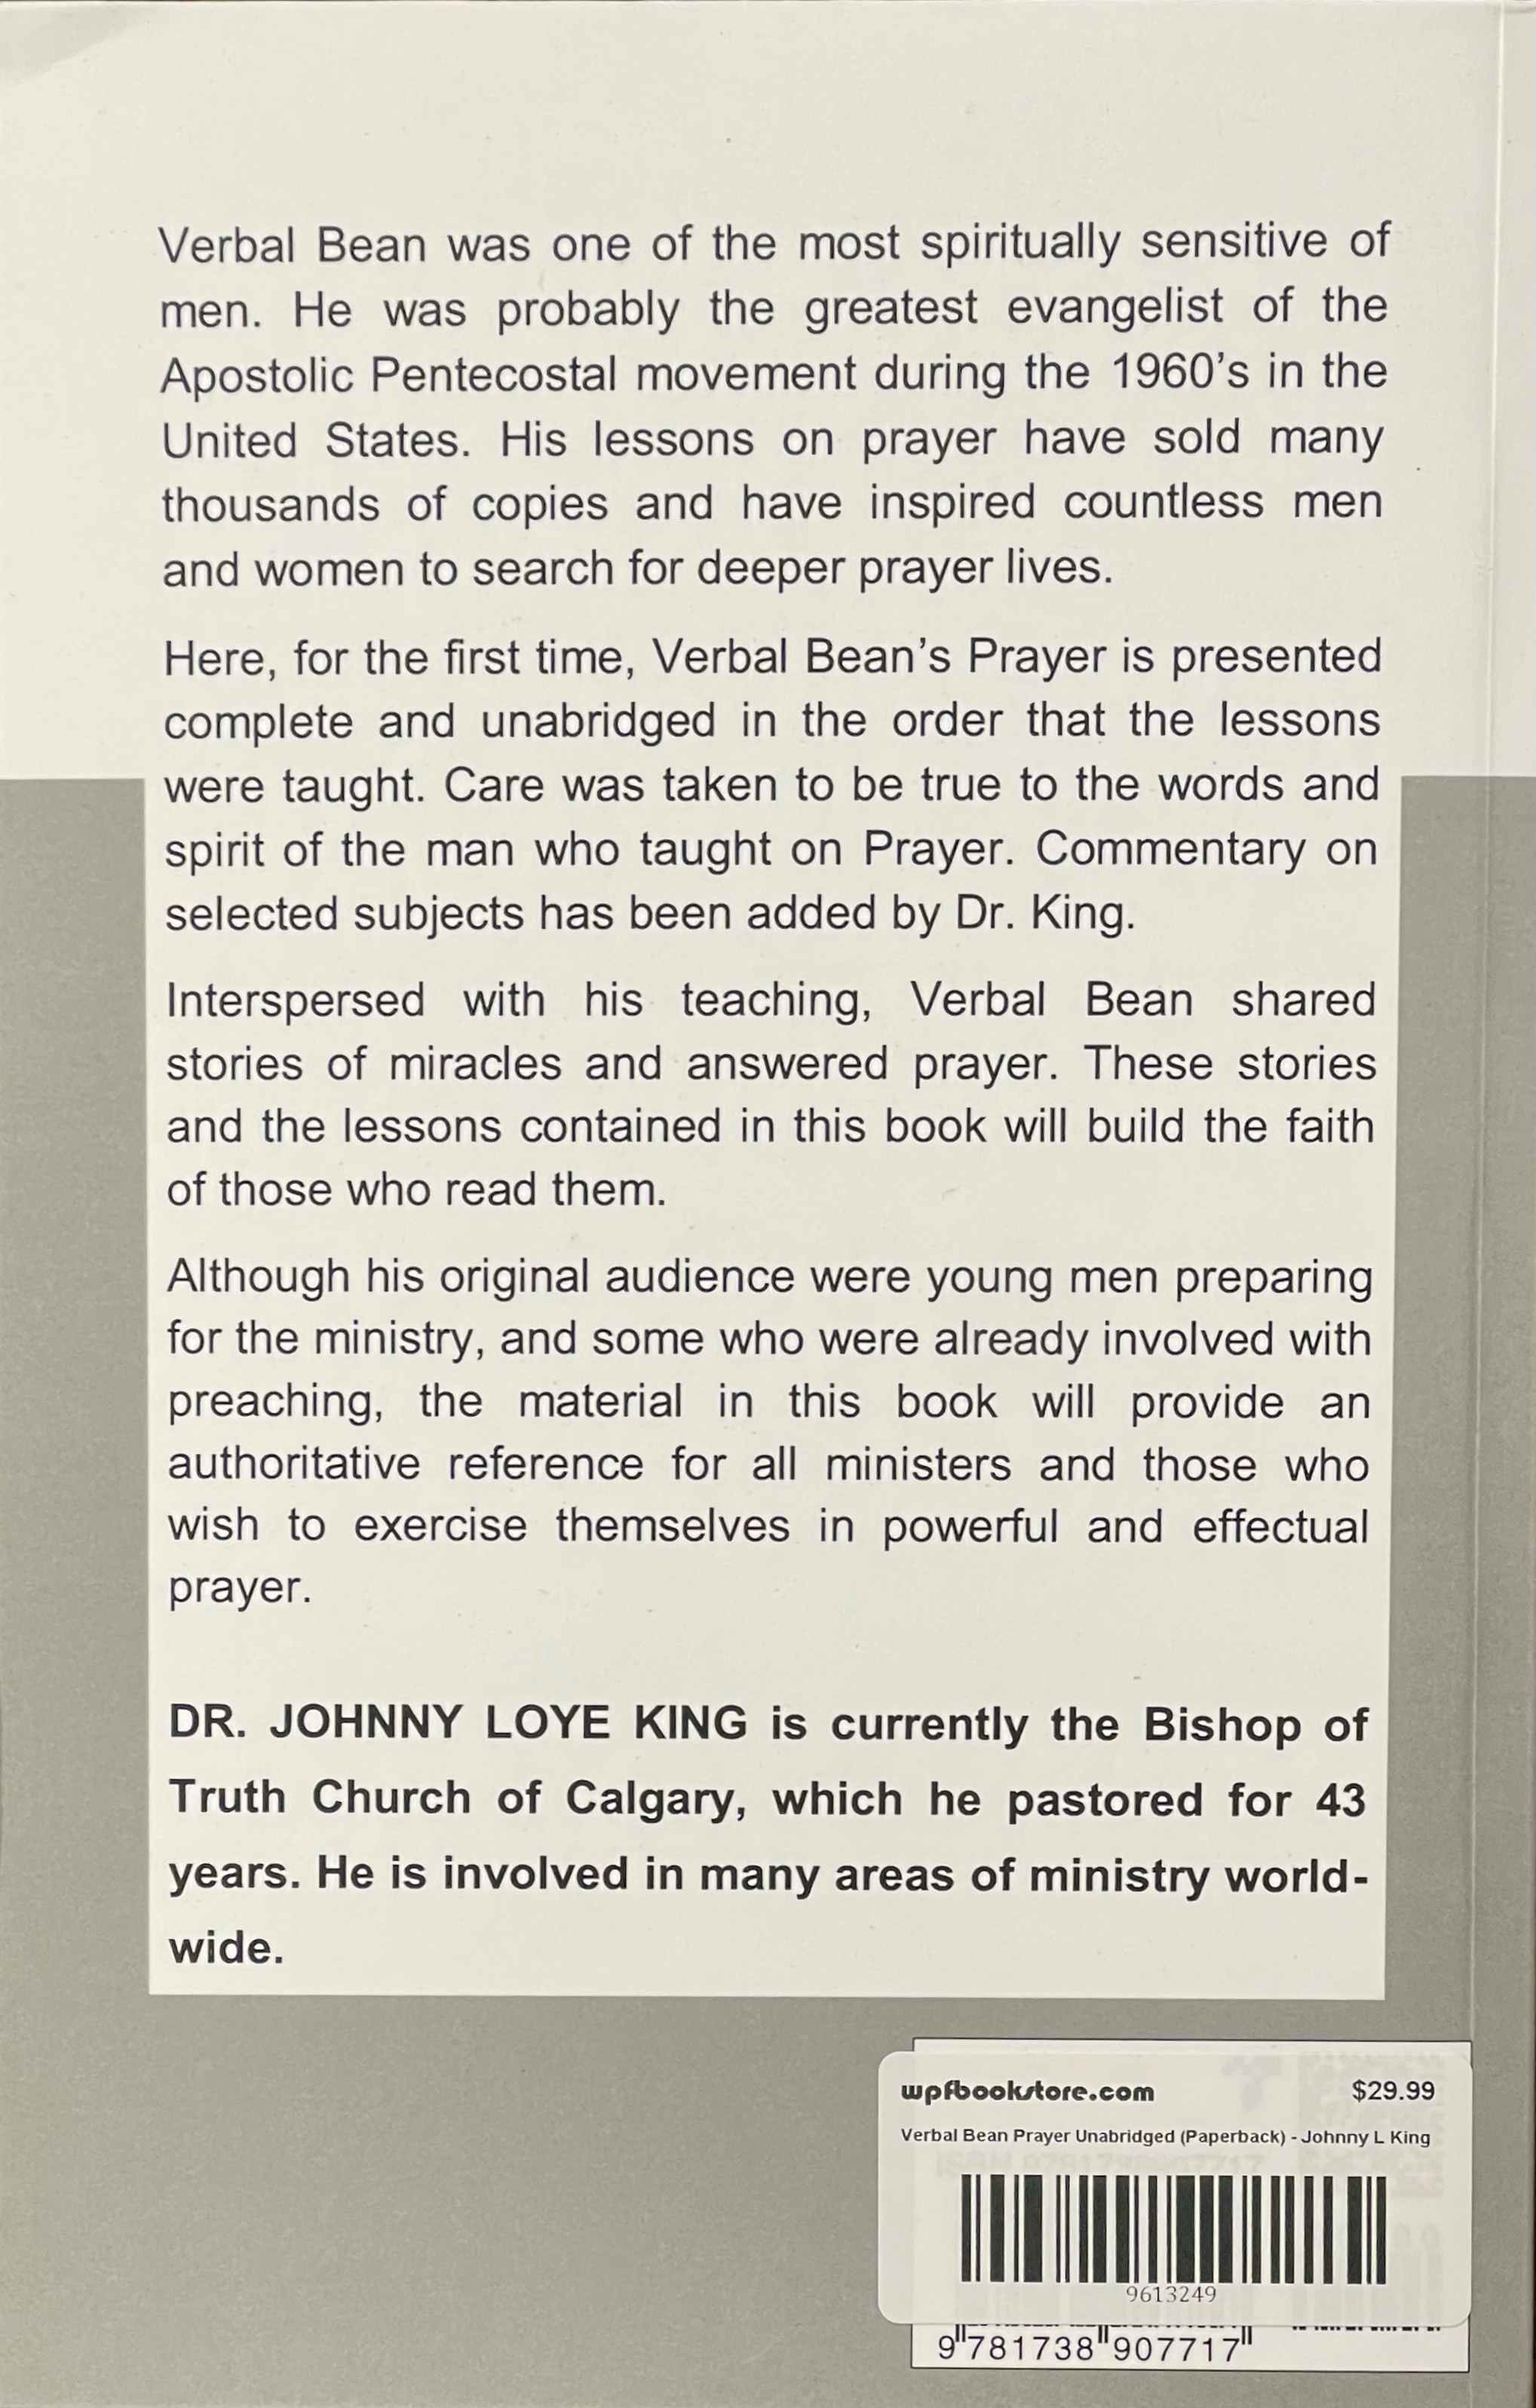 Verbal Bean Prayer Unabridged (Paperback) - Johnny L King, PhD